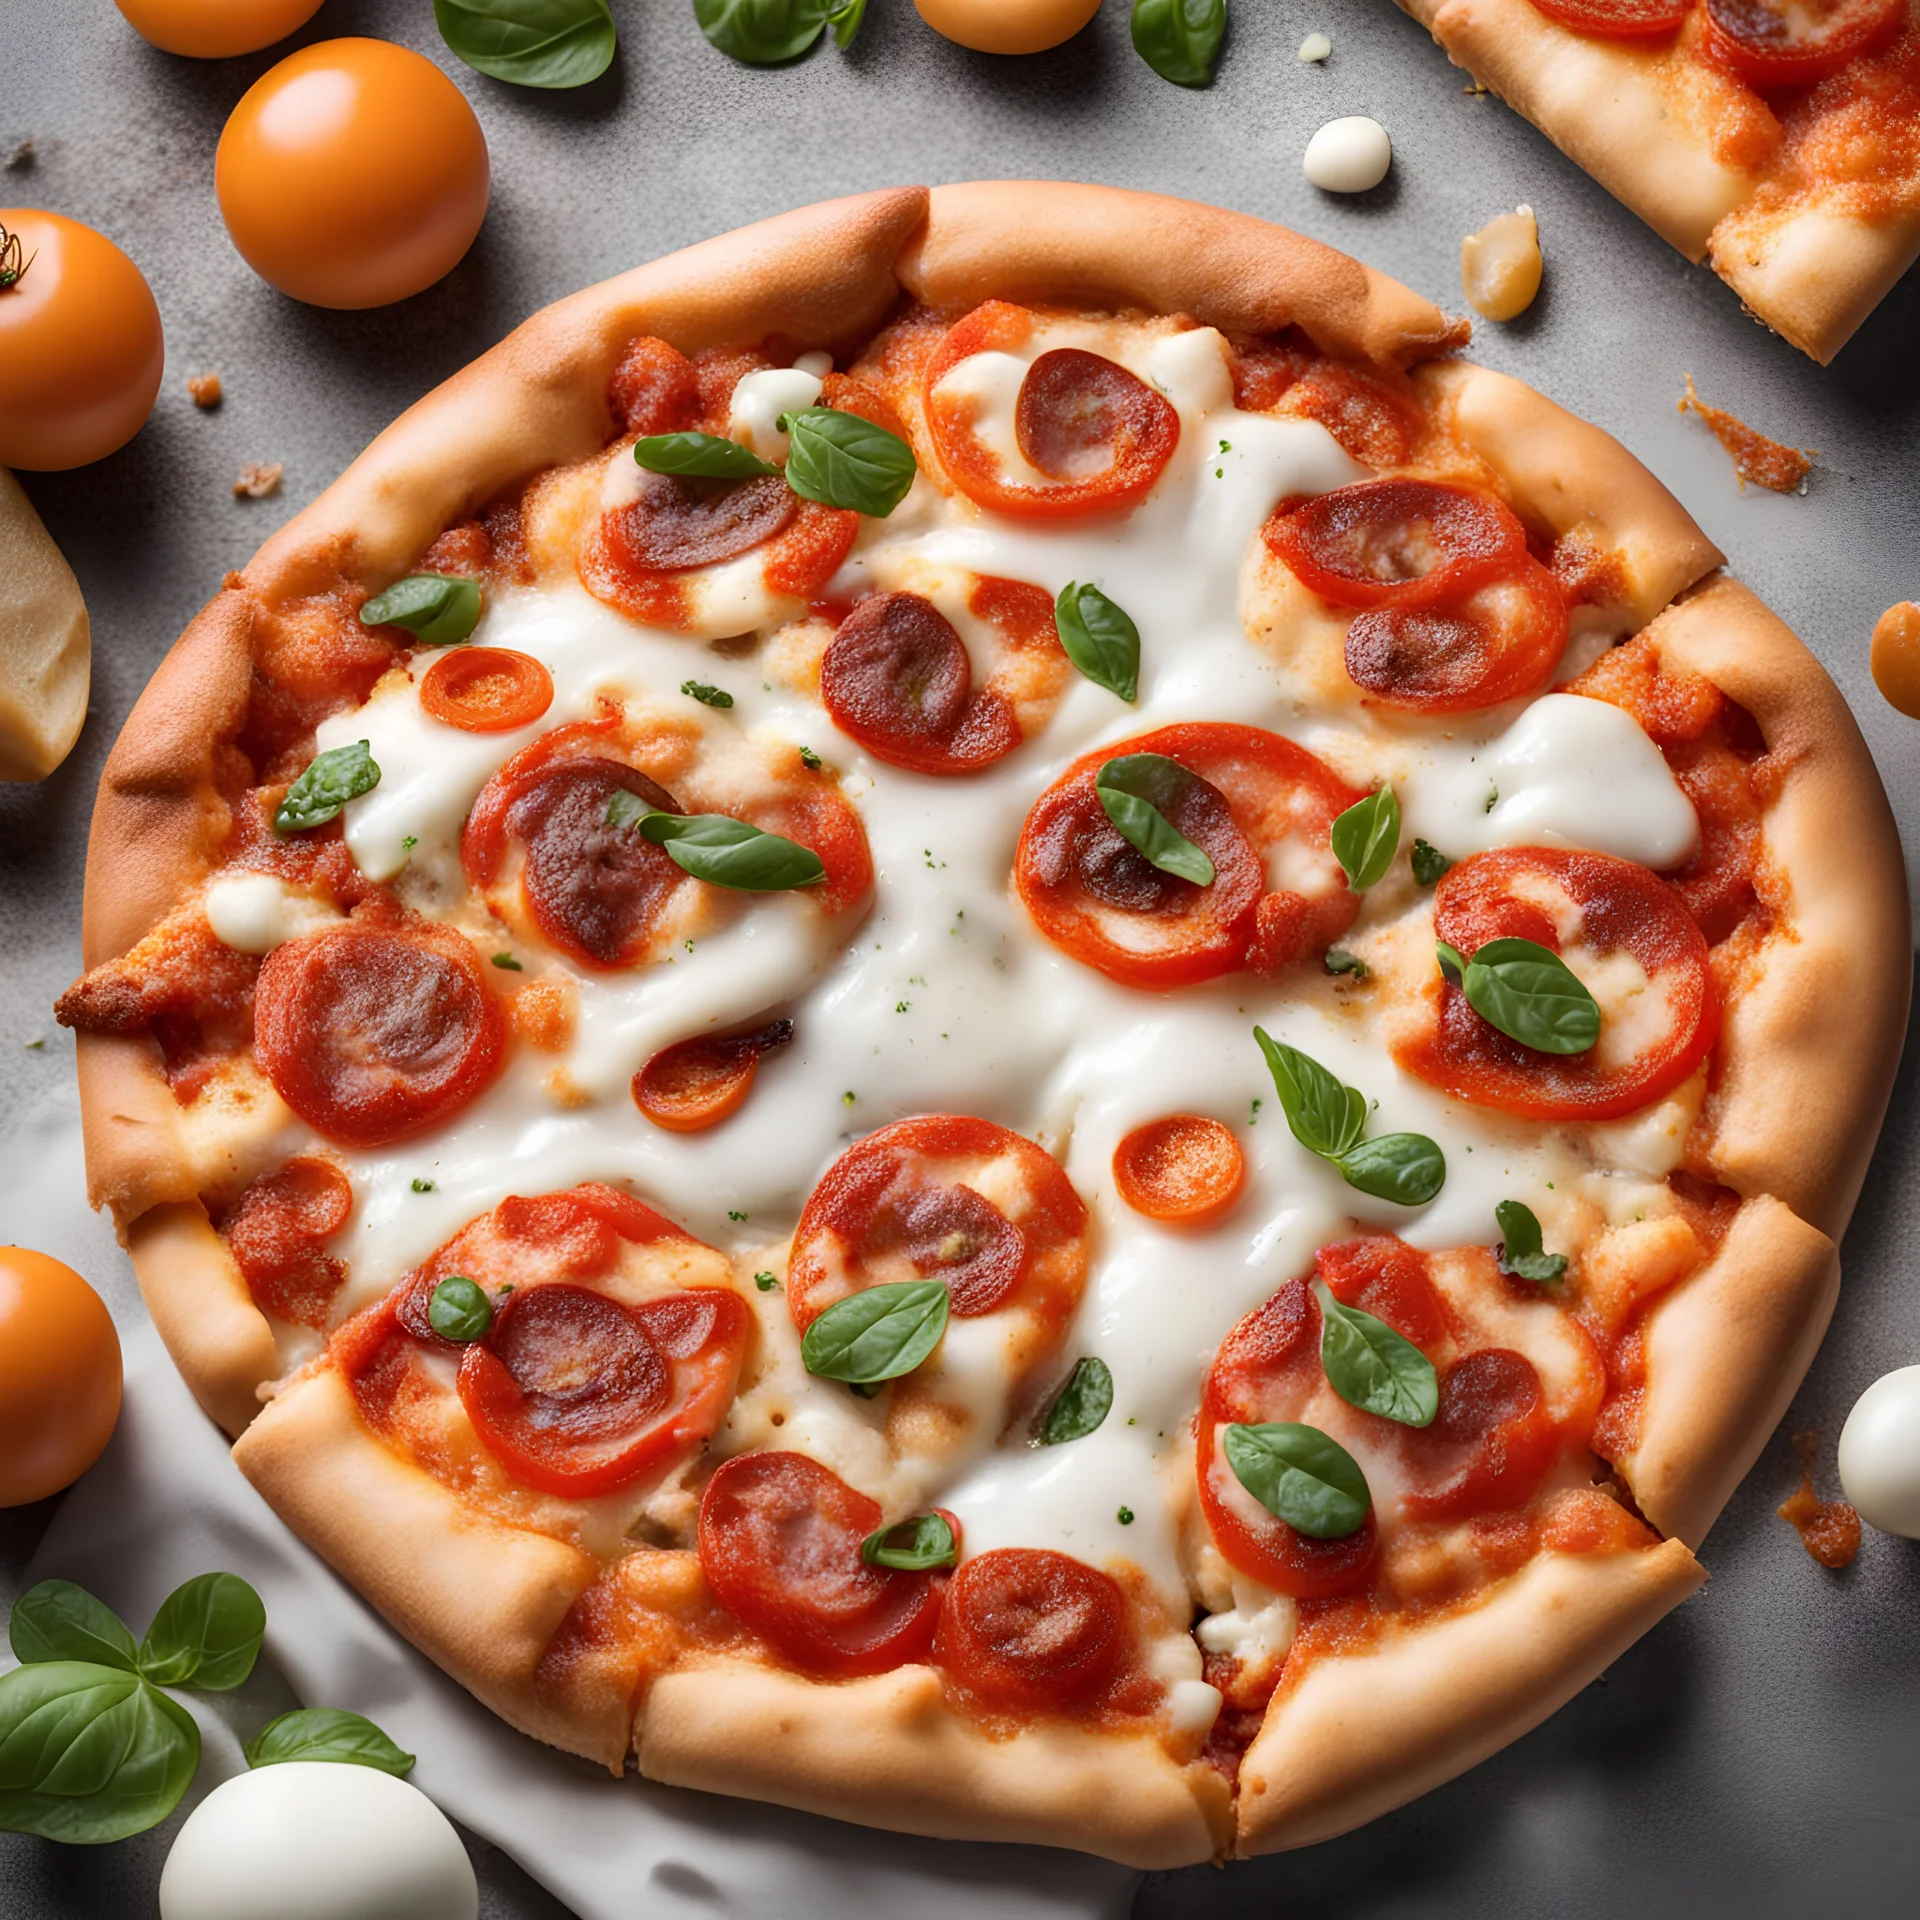 A social media post of a delicious pizza filled with mozzarella